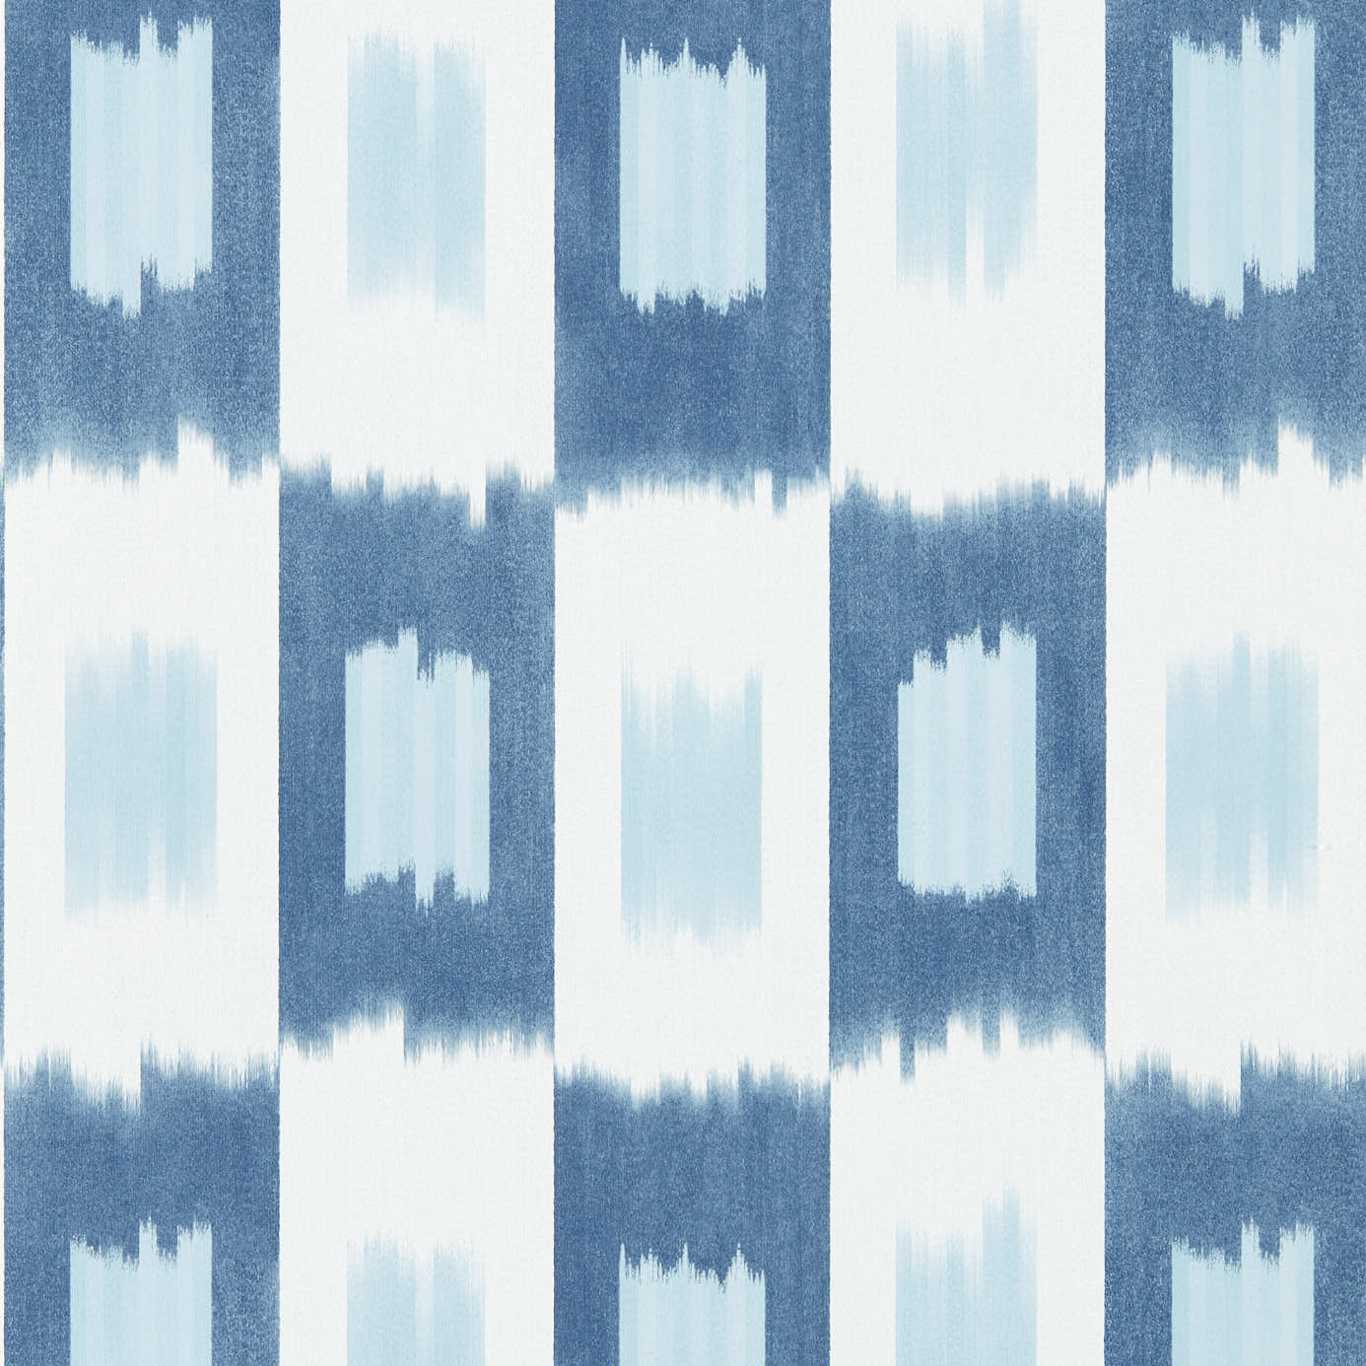 Shiruku Wild Water/Azul/Exhale Wallpaper by HAR